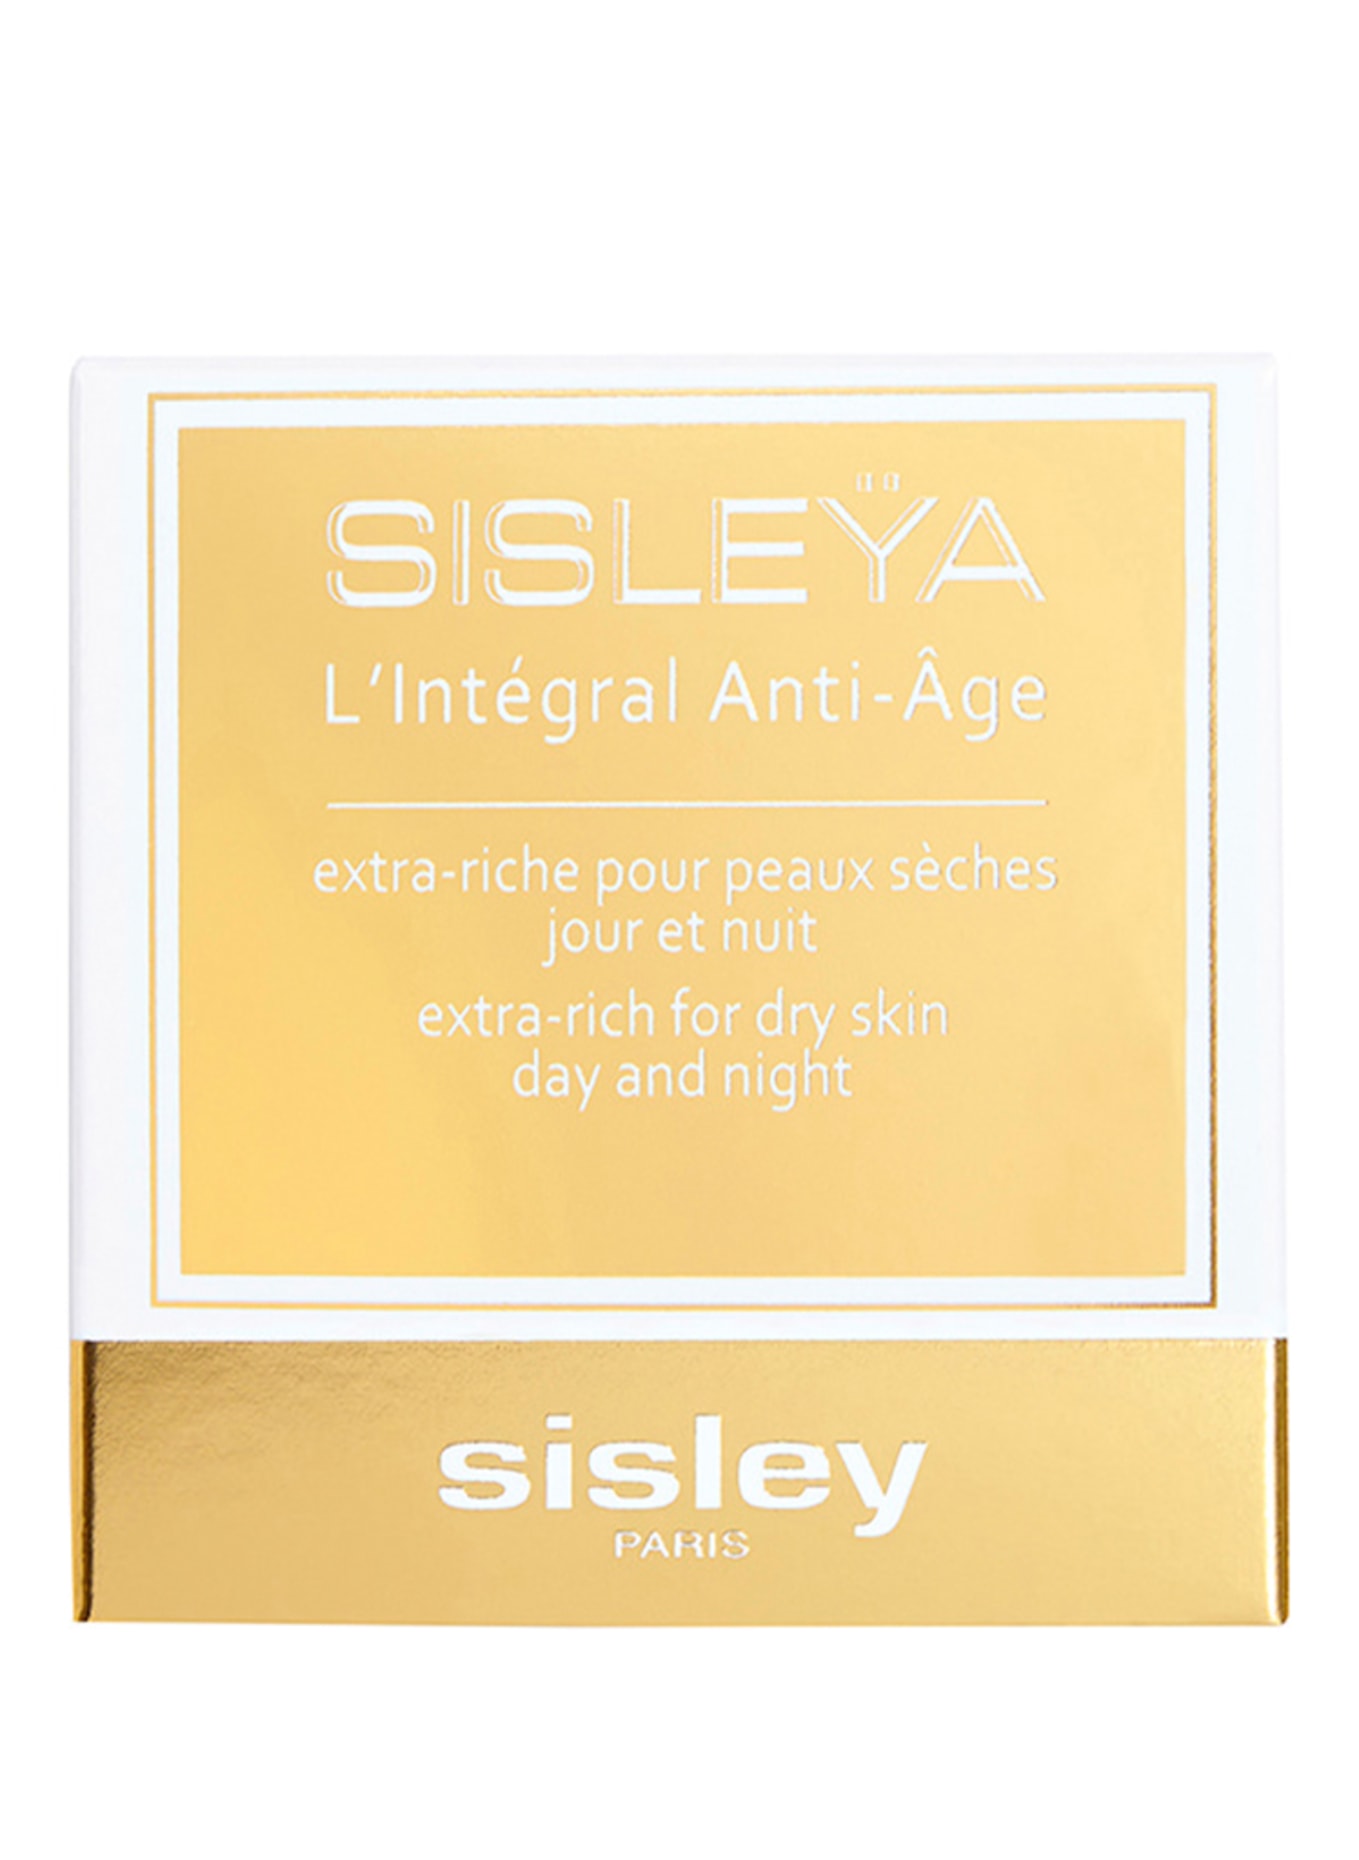 sisley Paris SISLEŸA L'INTÉGRAL ANTI-AGE EXTRA-RICH (Bild 2)